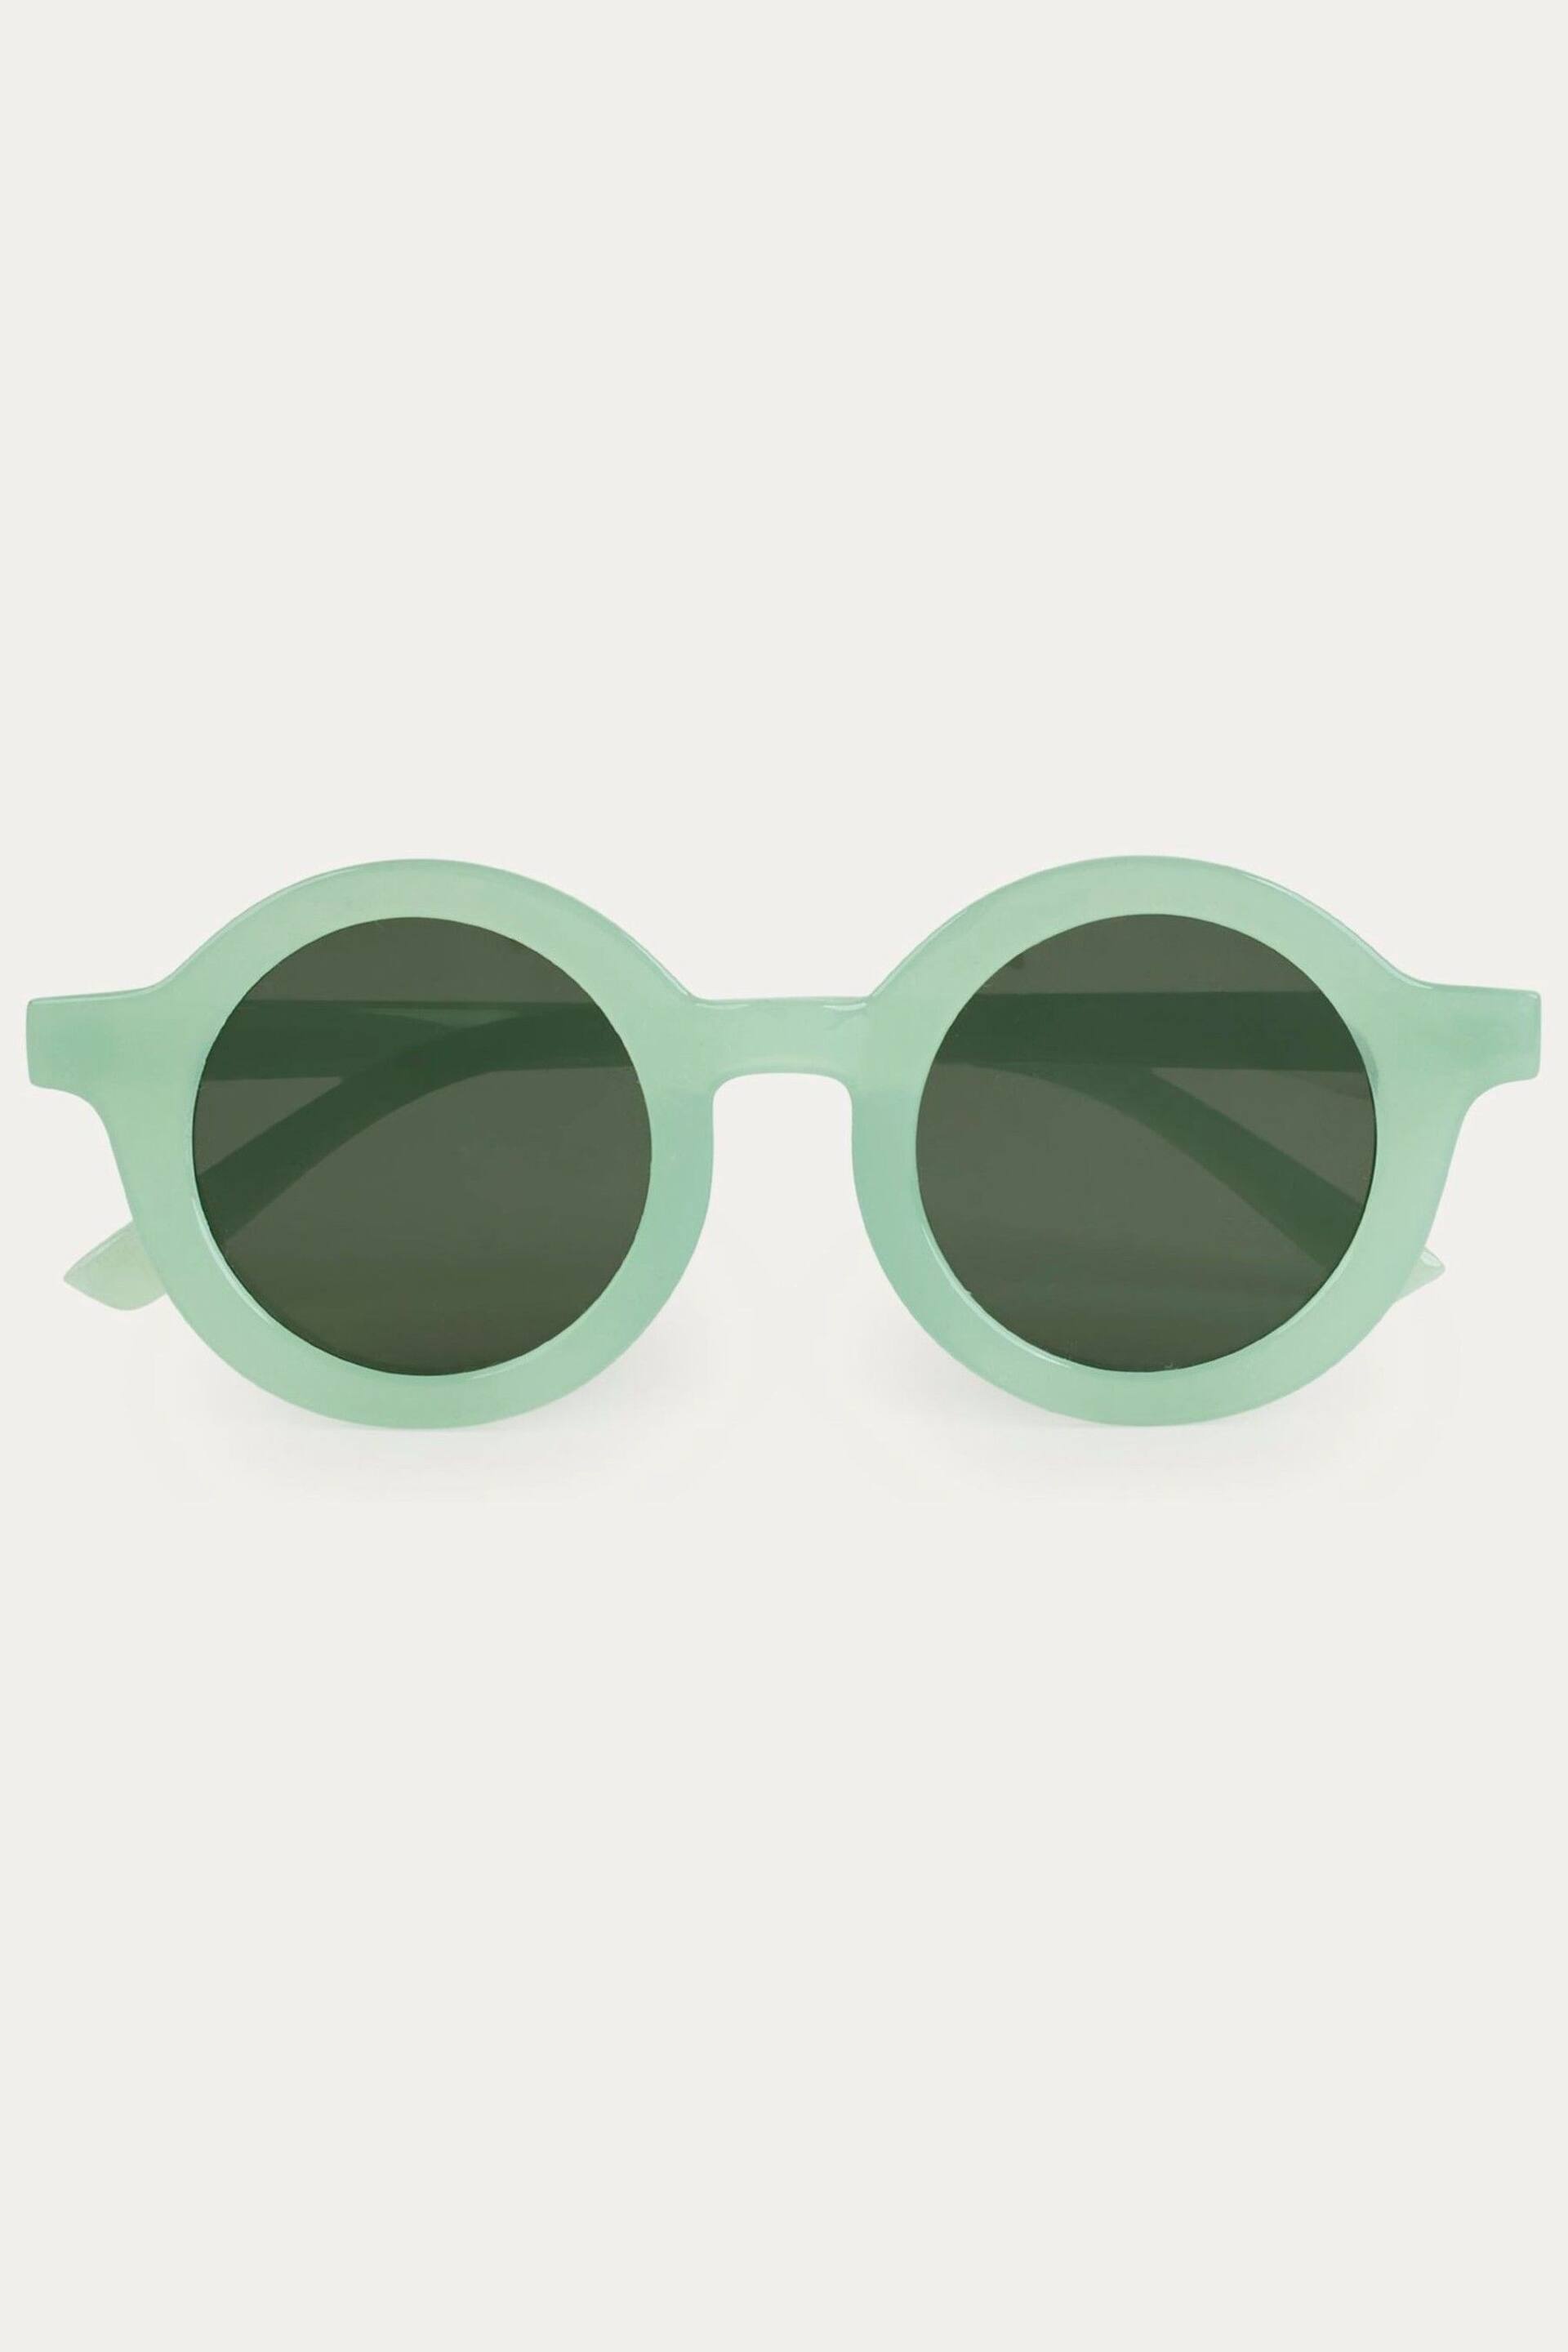 KIDLY Round Sunglasses - Image 2 of 4